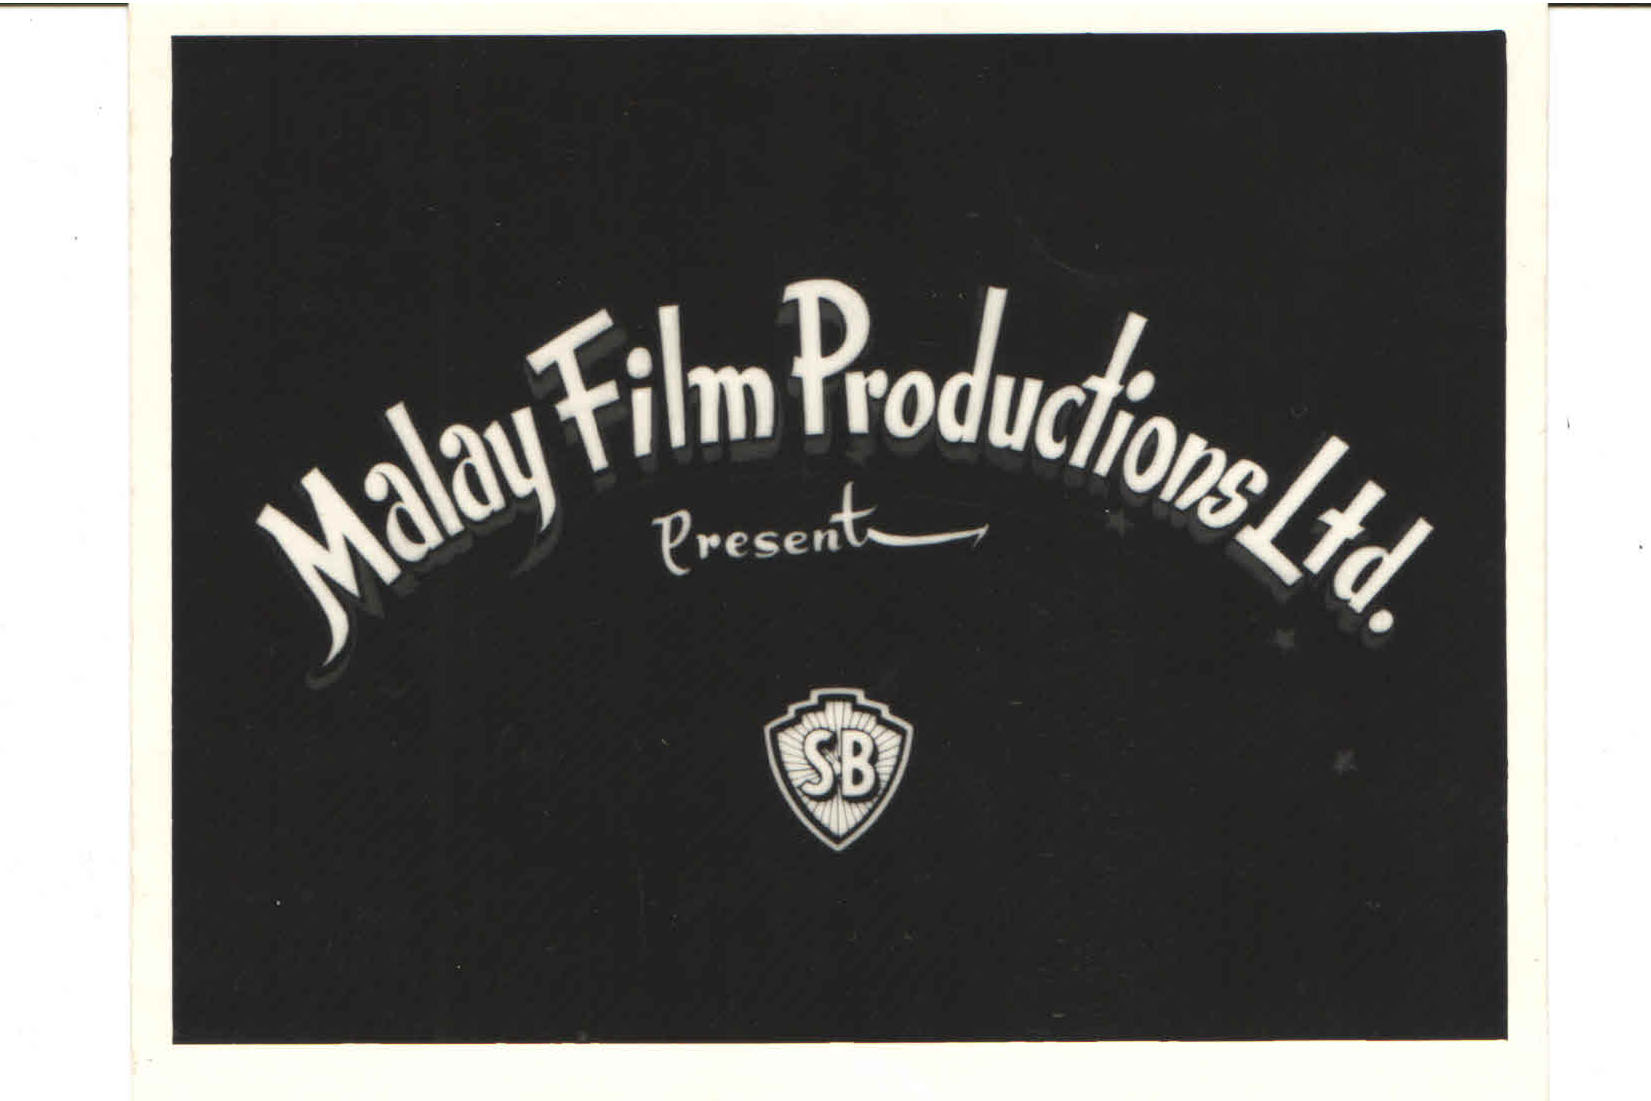 Former Malay Film Productions Studio